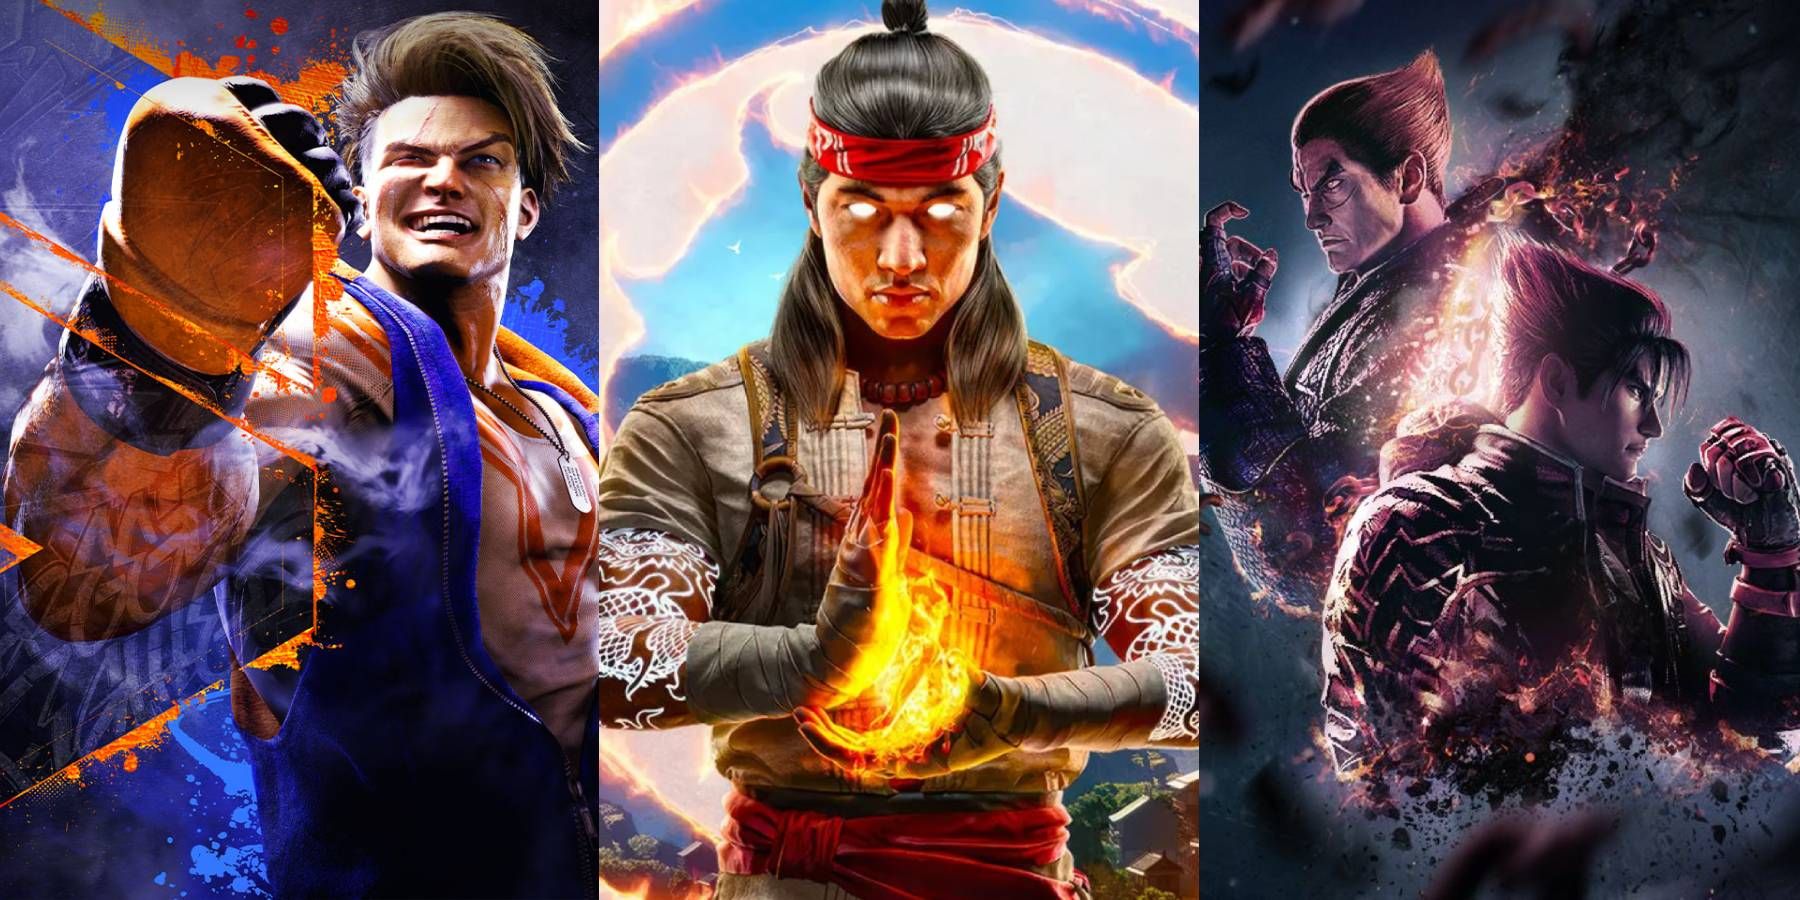 Cover art close-ups from Street Fighter 6, Mortal Kombat 1, and Tekken 8